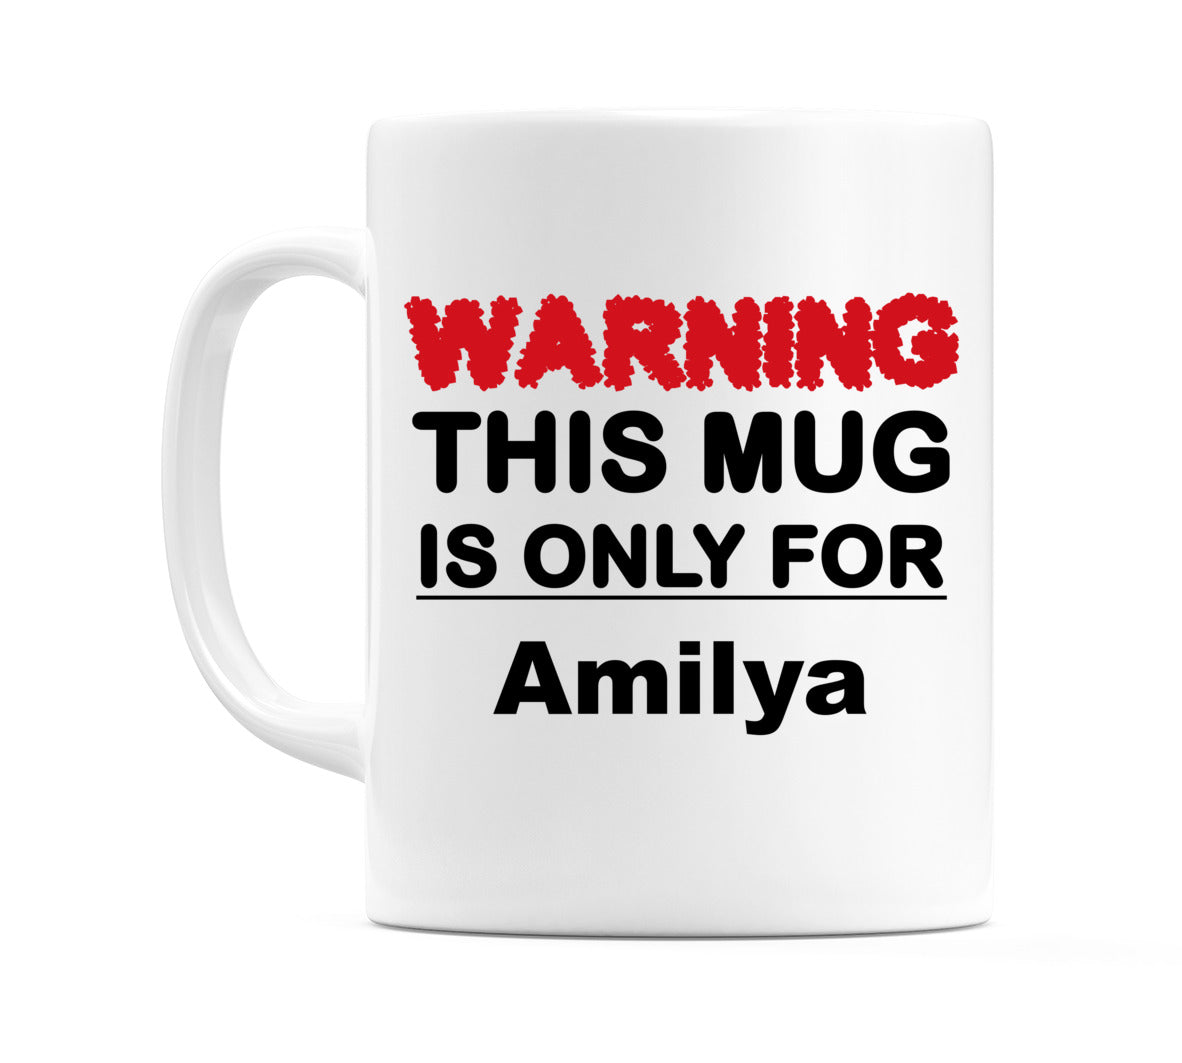 Warning This Mug is ONLY for Amilya Mug